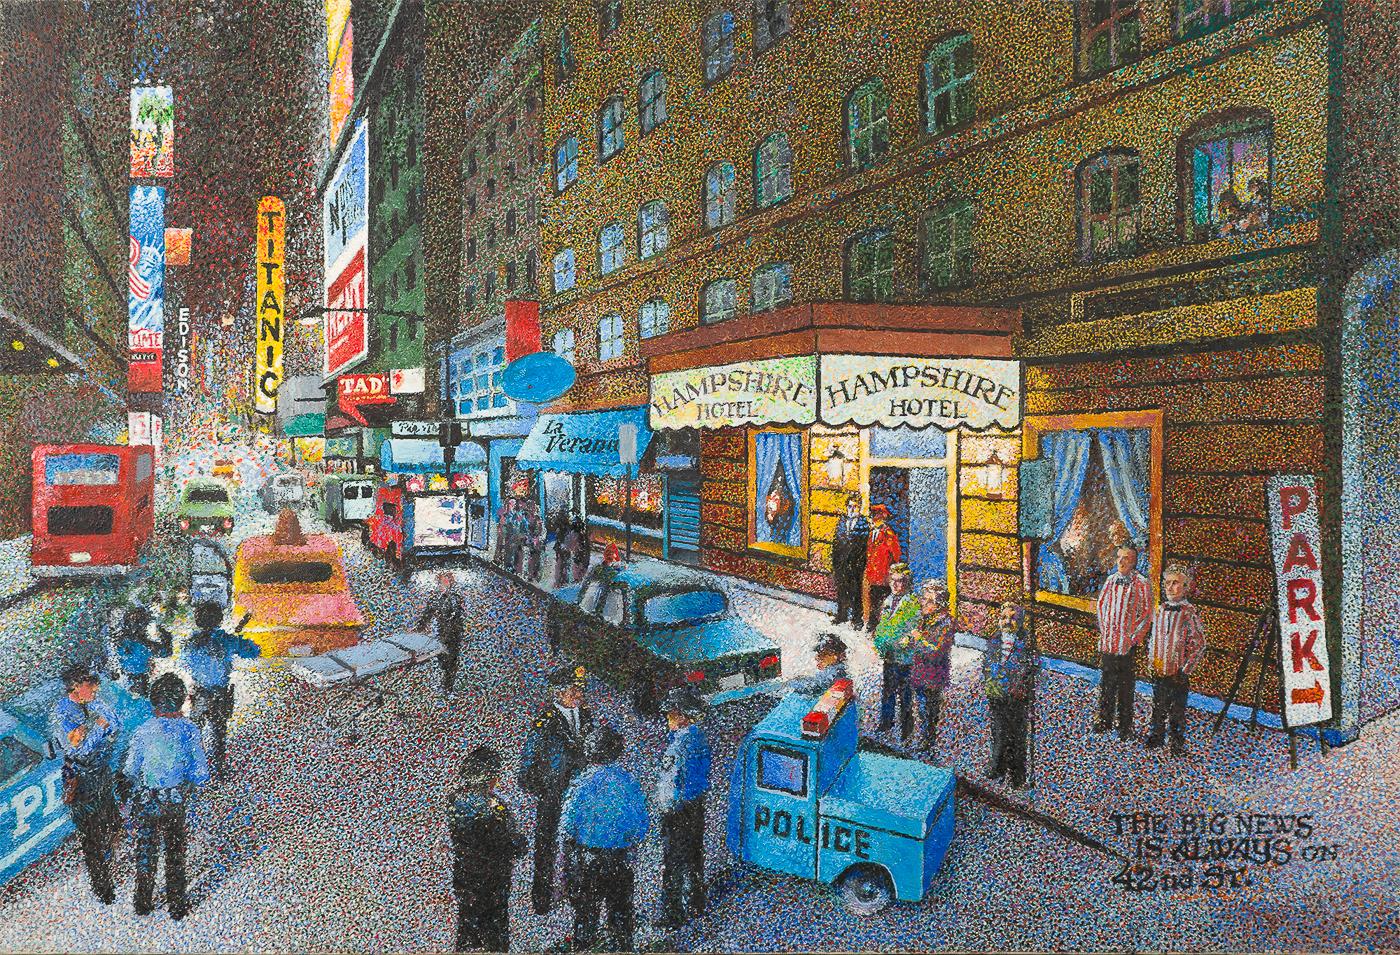 Alec Montroy Landscape Painting – The Big News befindet sich immer in der 42nd Street